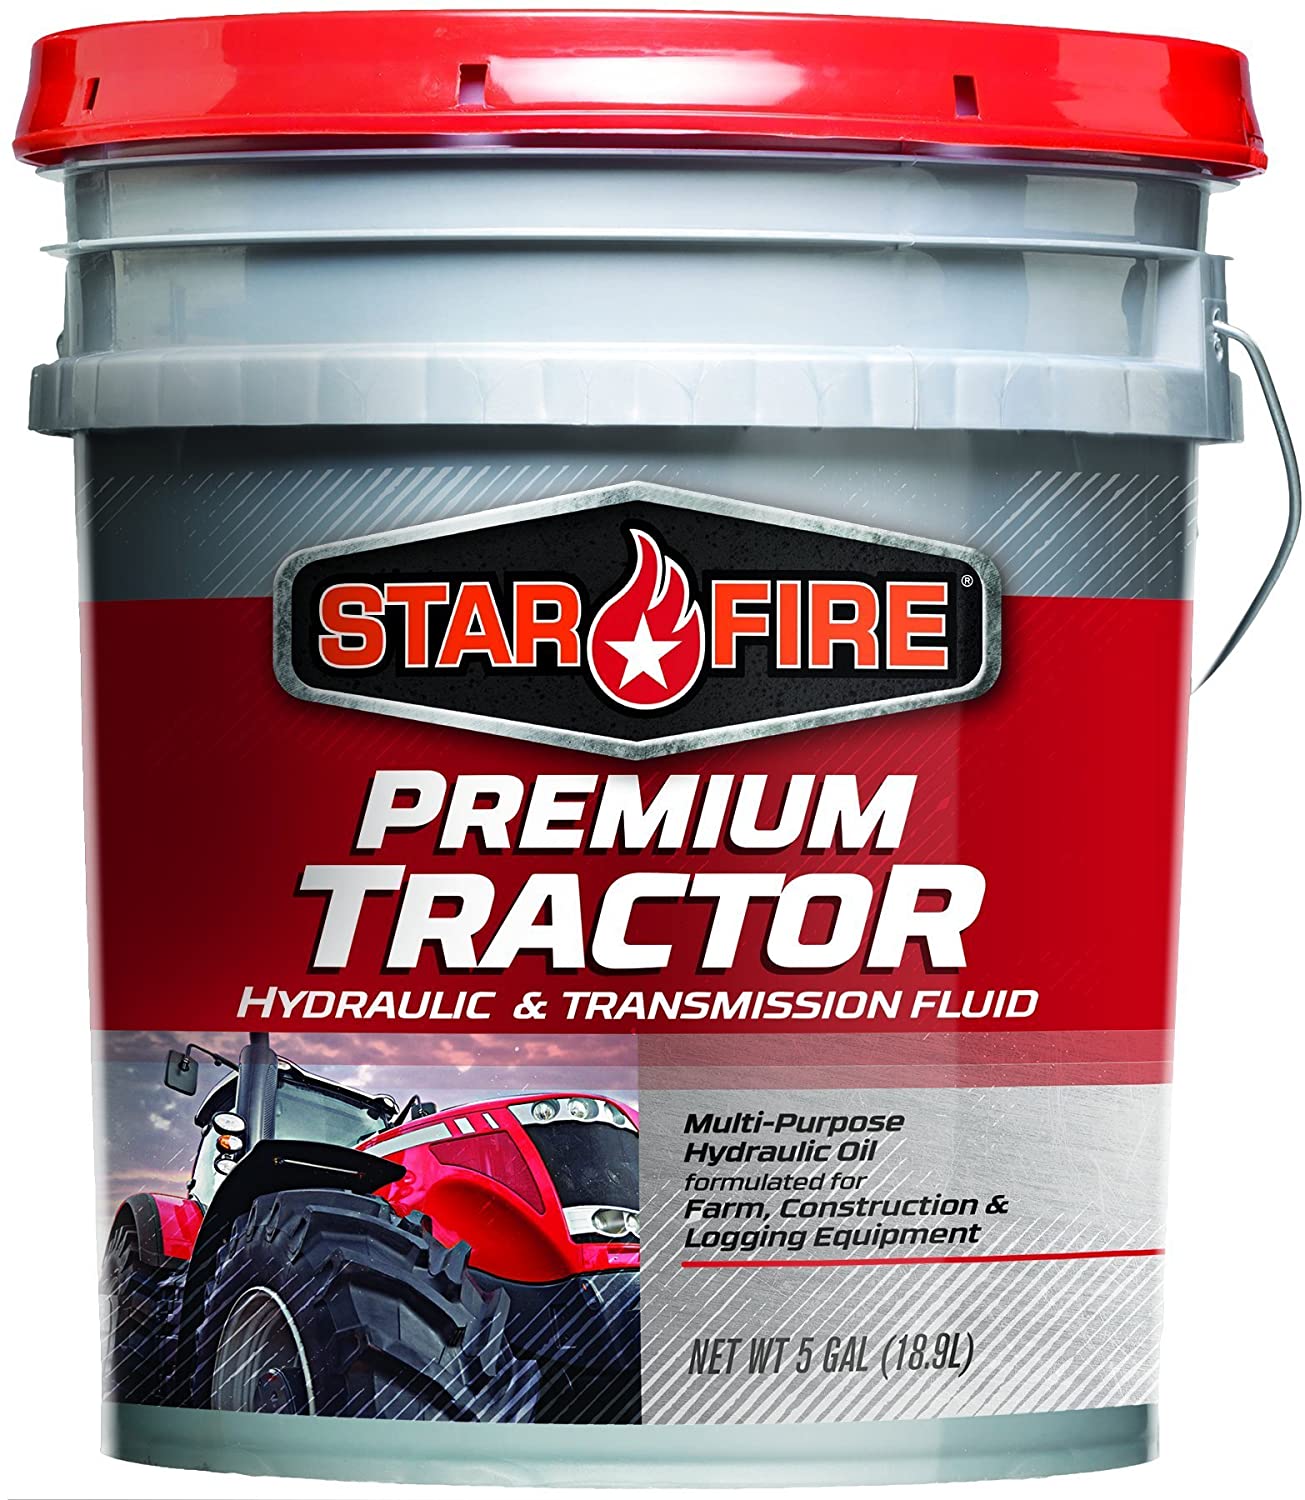 Starfire Premium Tractor Hydraulic & Transmission Fluid (J20C Equivalent)